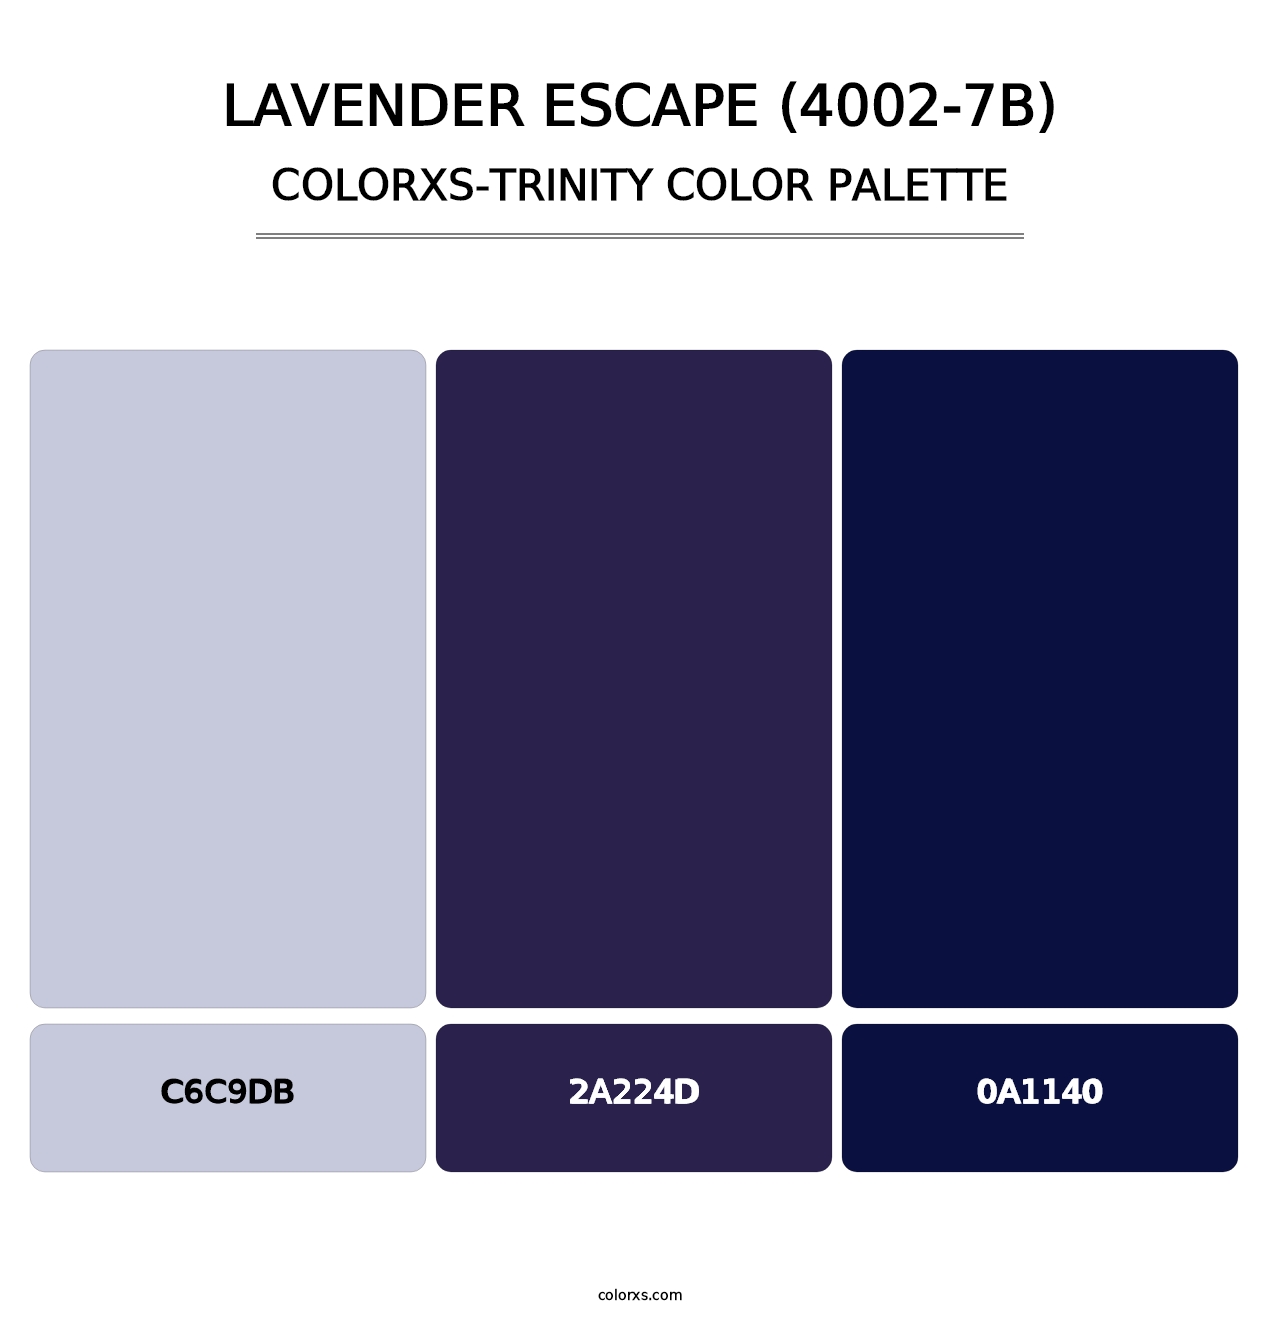 Lavender Escape (4002-7B) - Colorxs Trinity Palette